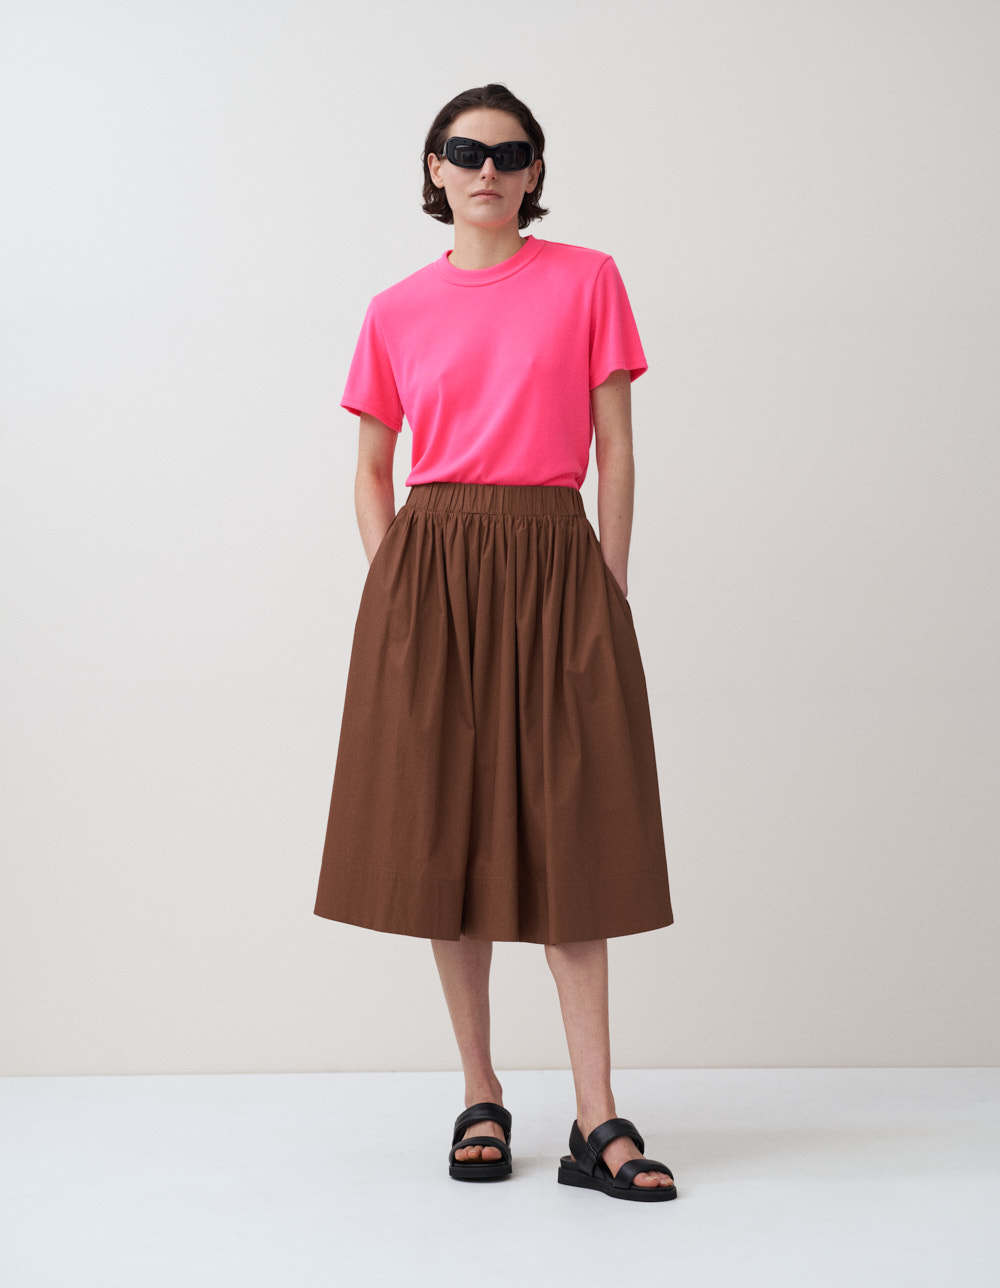 Rika Studios Mia Tee Neon Pink Ophelia Skirt